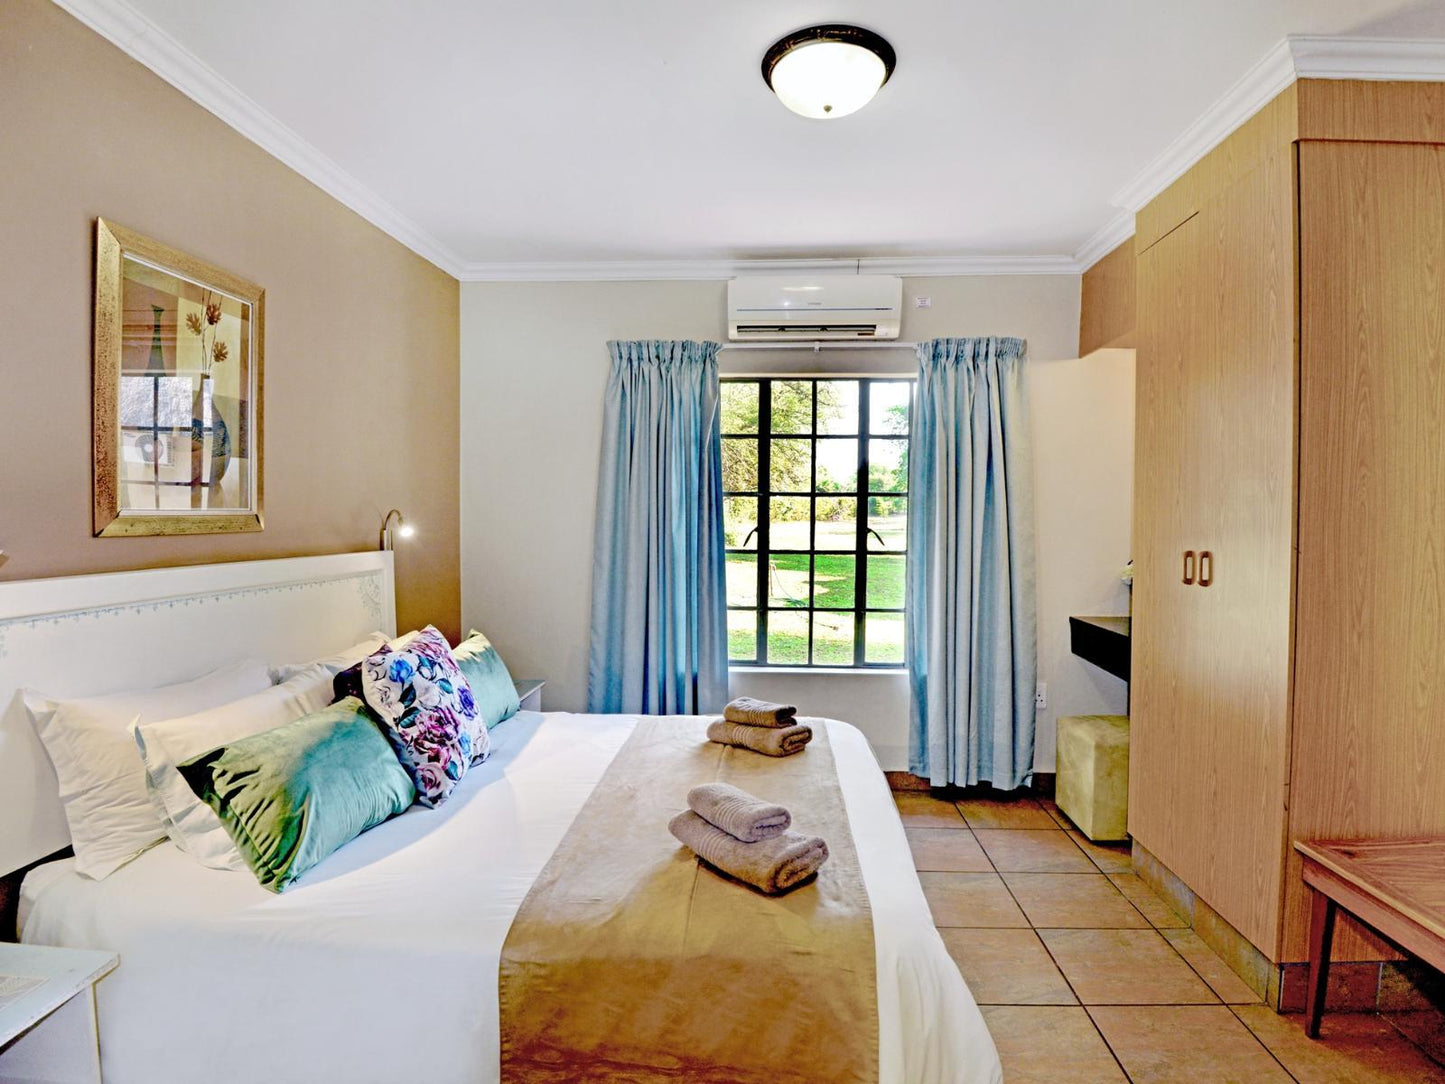 Luxury 2 bedroom Cottage @ Komati River Chalets